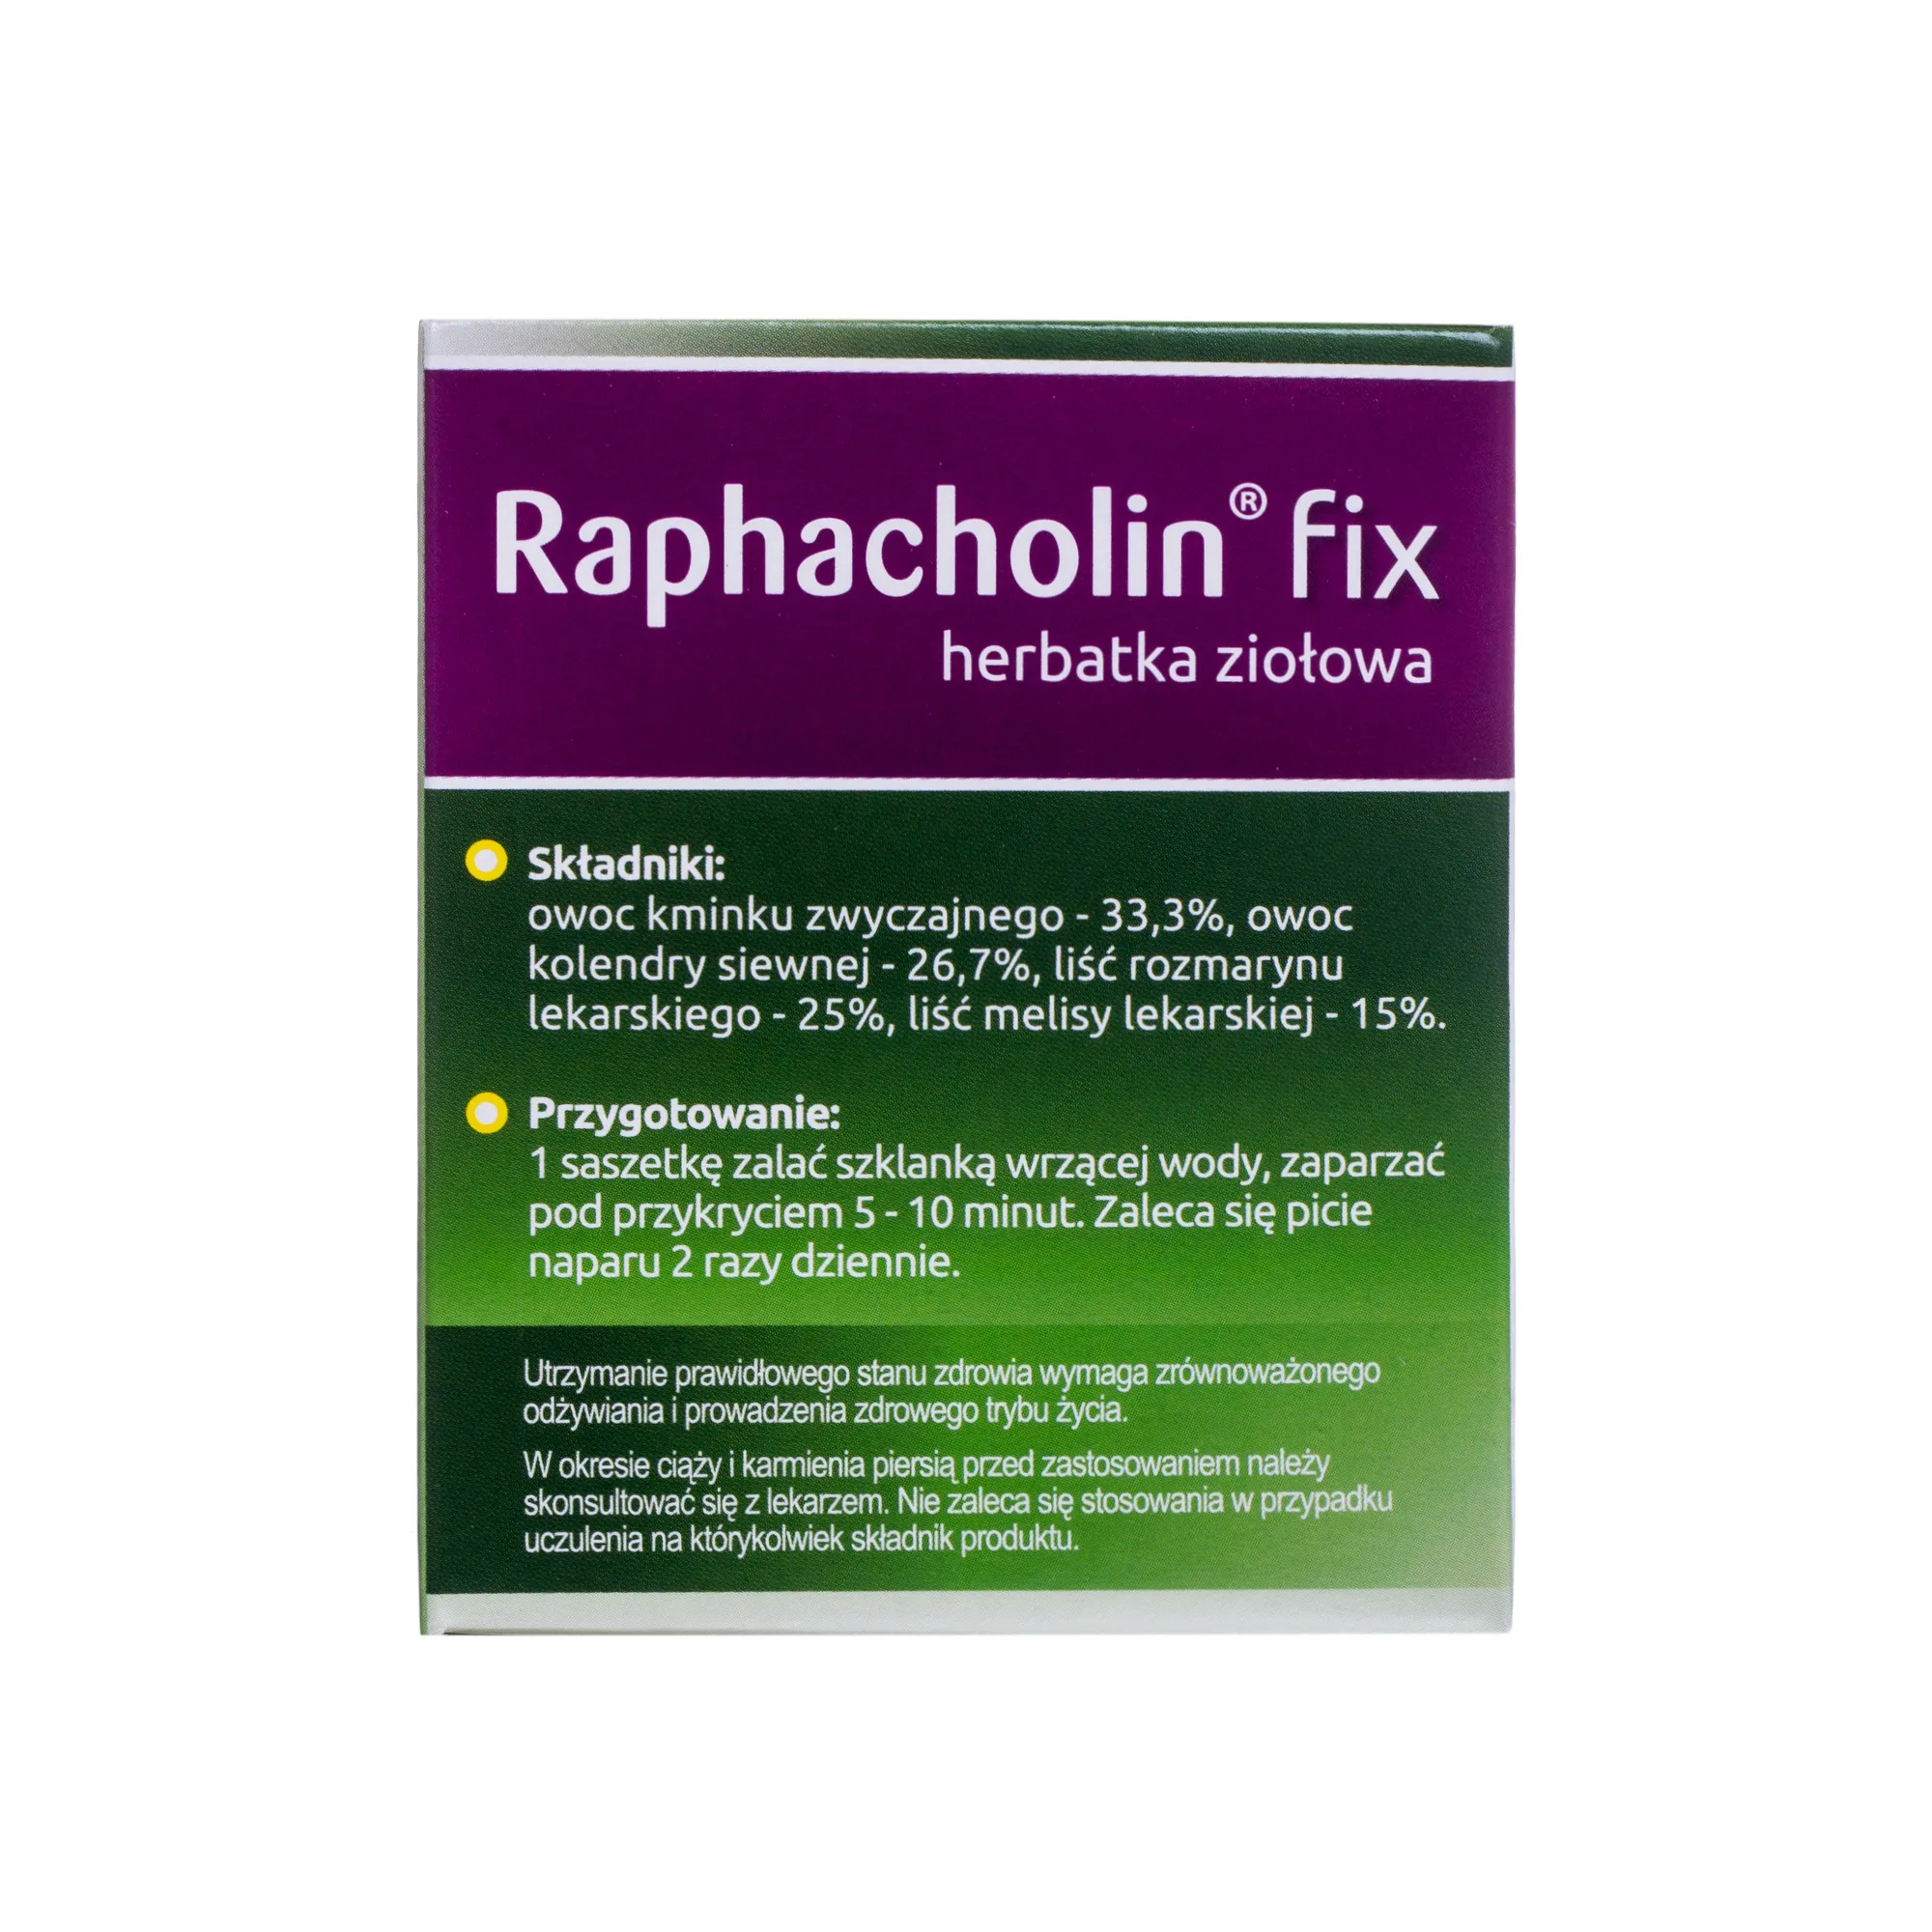 Raphacholin fix, suplement diety, herbata ziołowa na dobre trawienie, 20 saszetek 